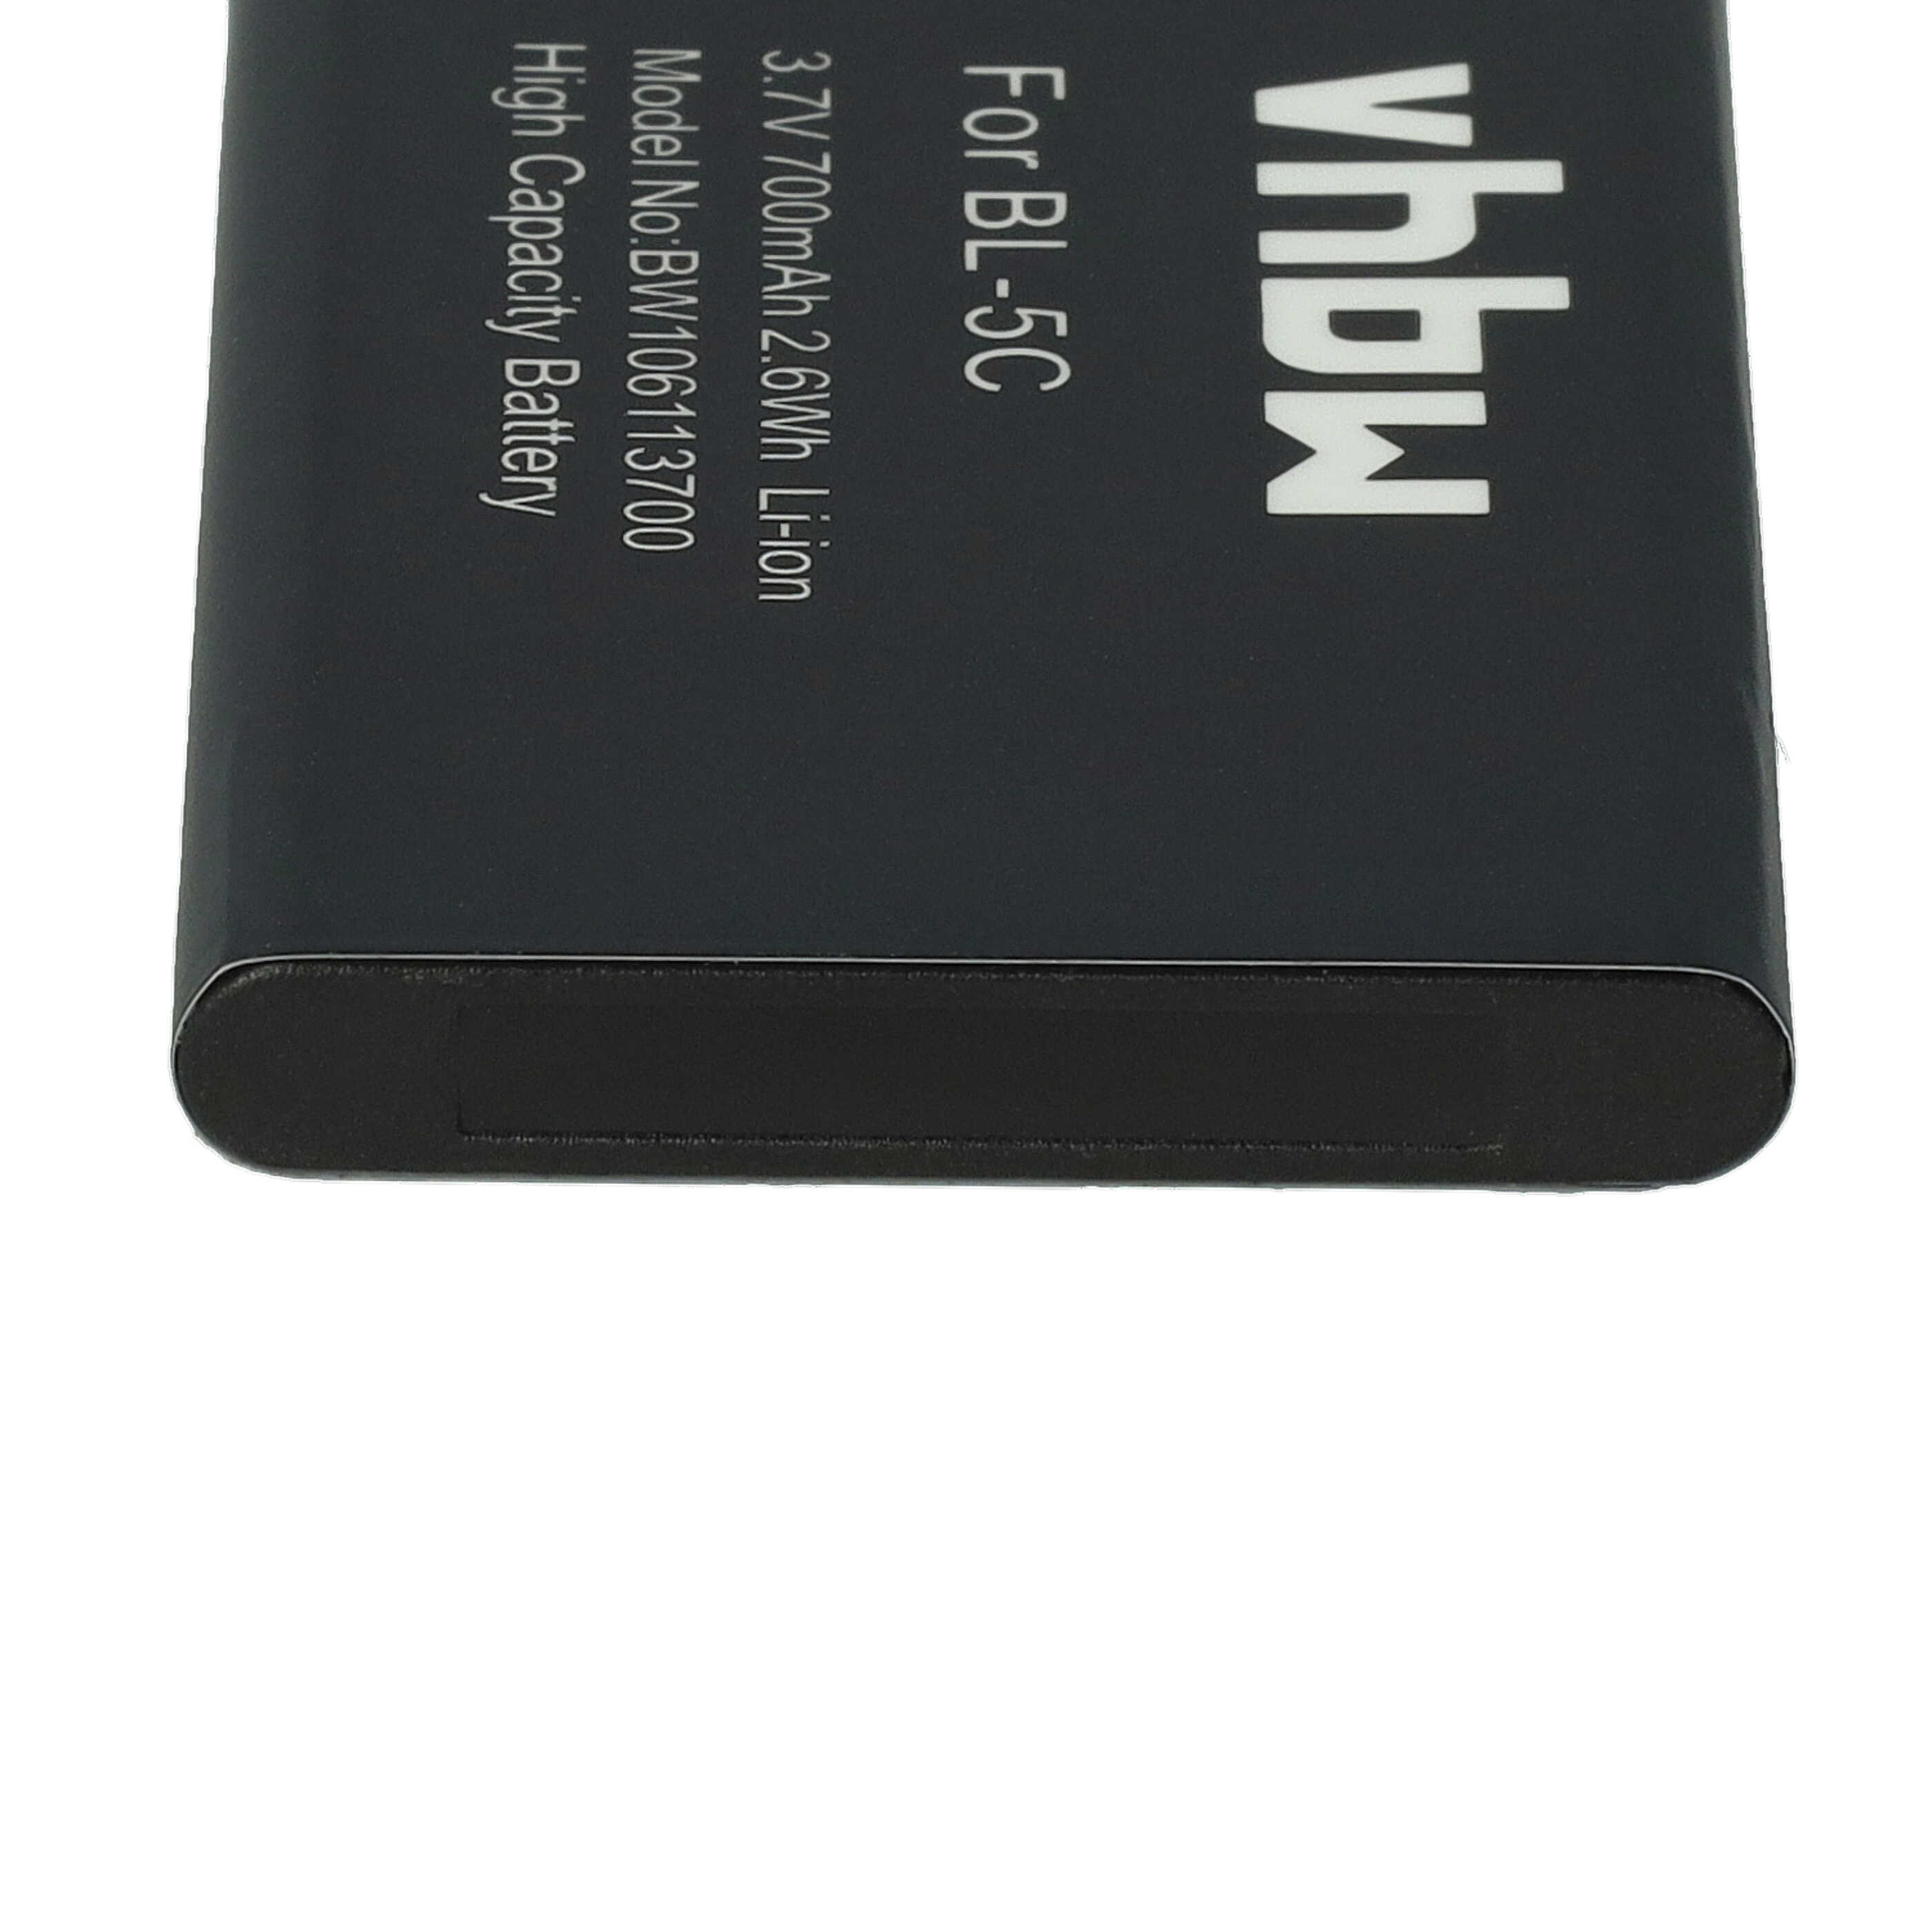 Batteria sostituisce Levana WLW523450 ERA per babyphone Philips - 700mAh 3,7V Li-Ion